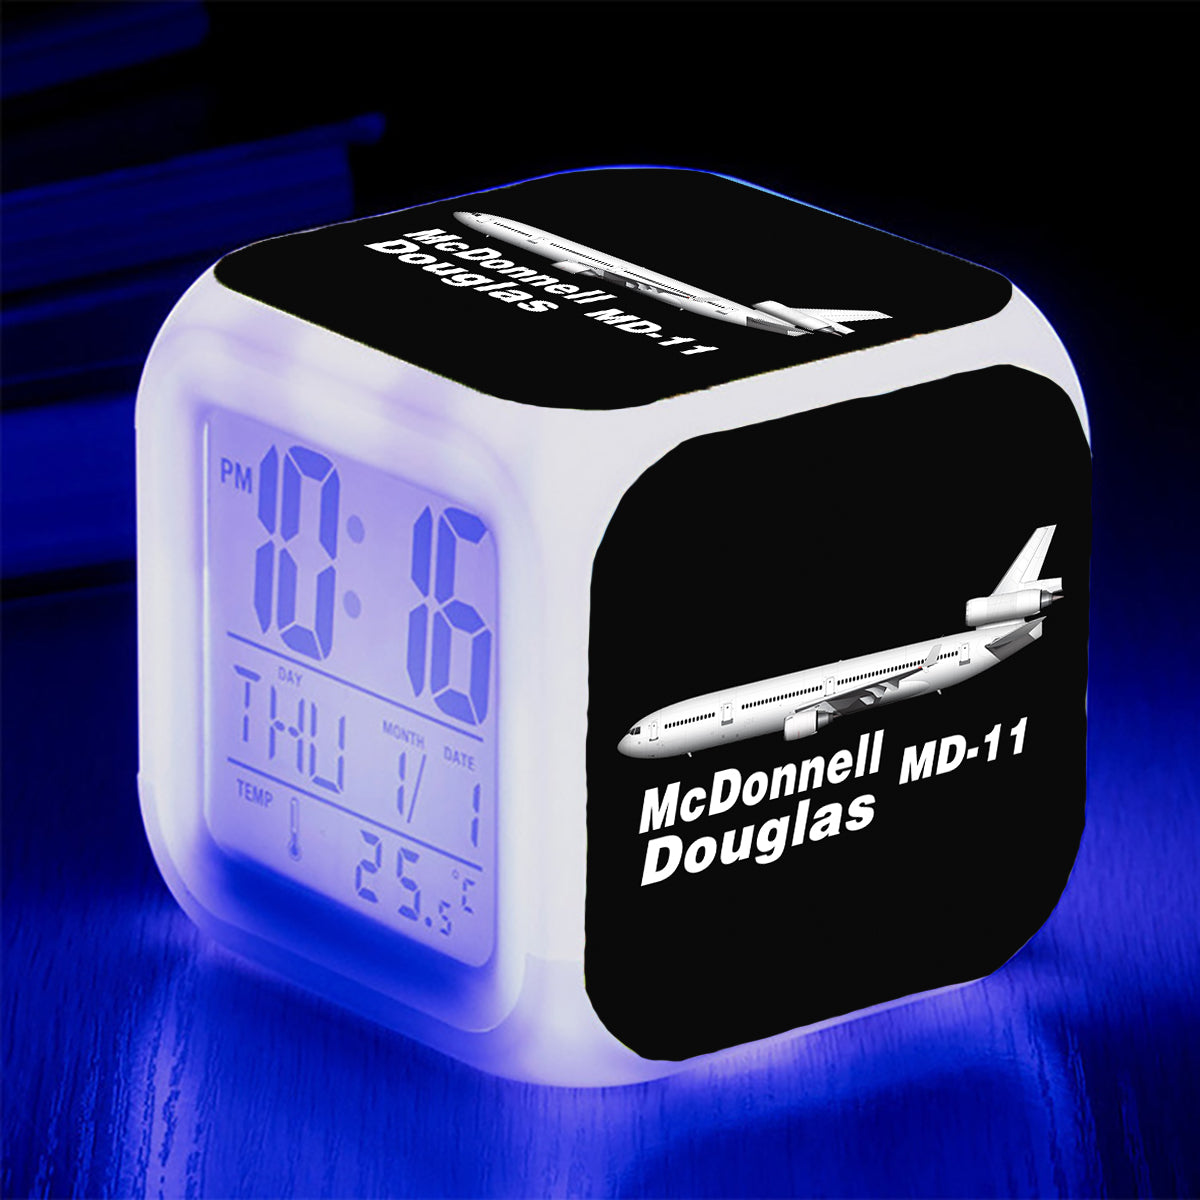 The McDonnell Douglas MD-11 Designed "7 Colour" Digital Alarm Clock